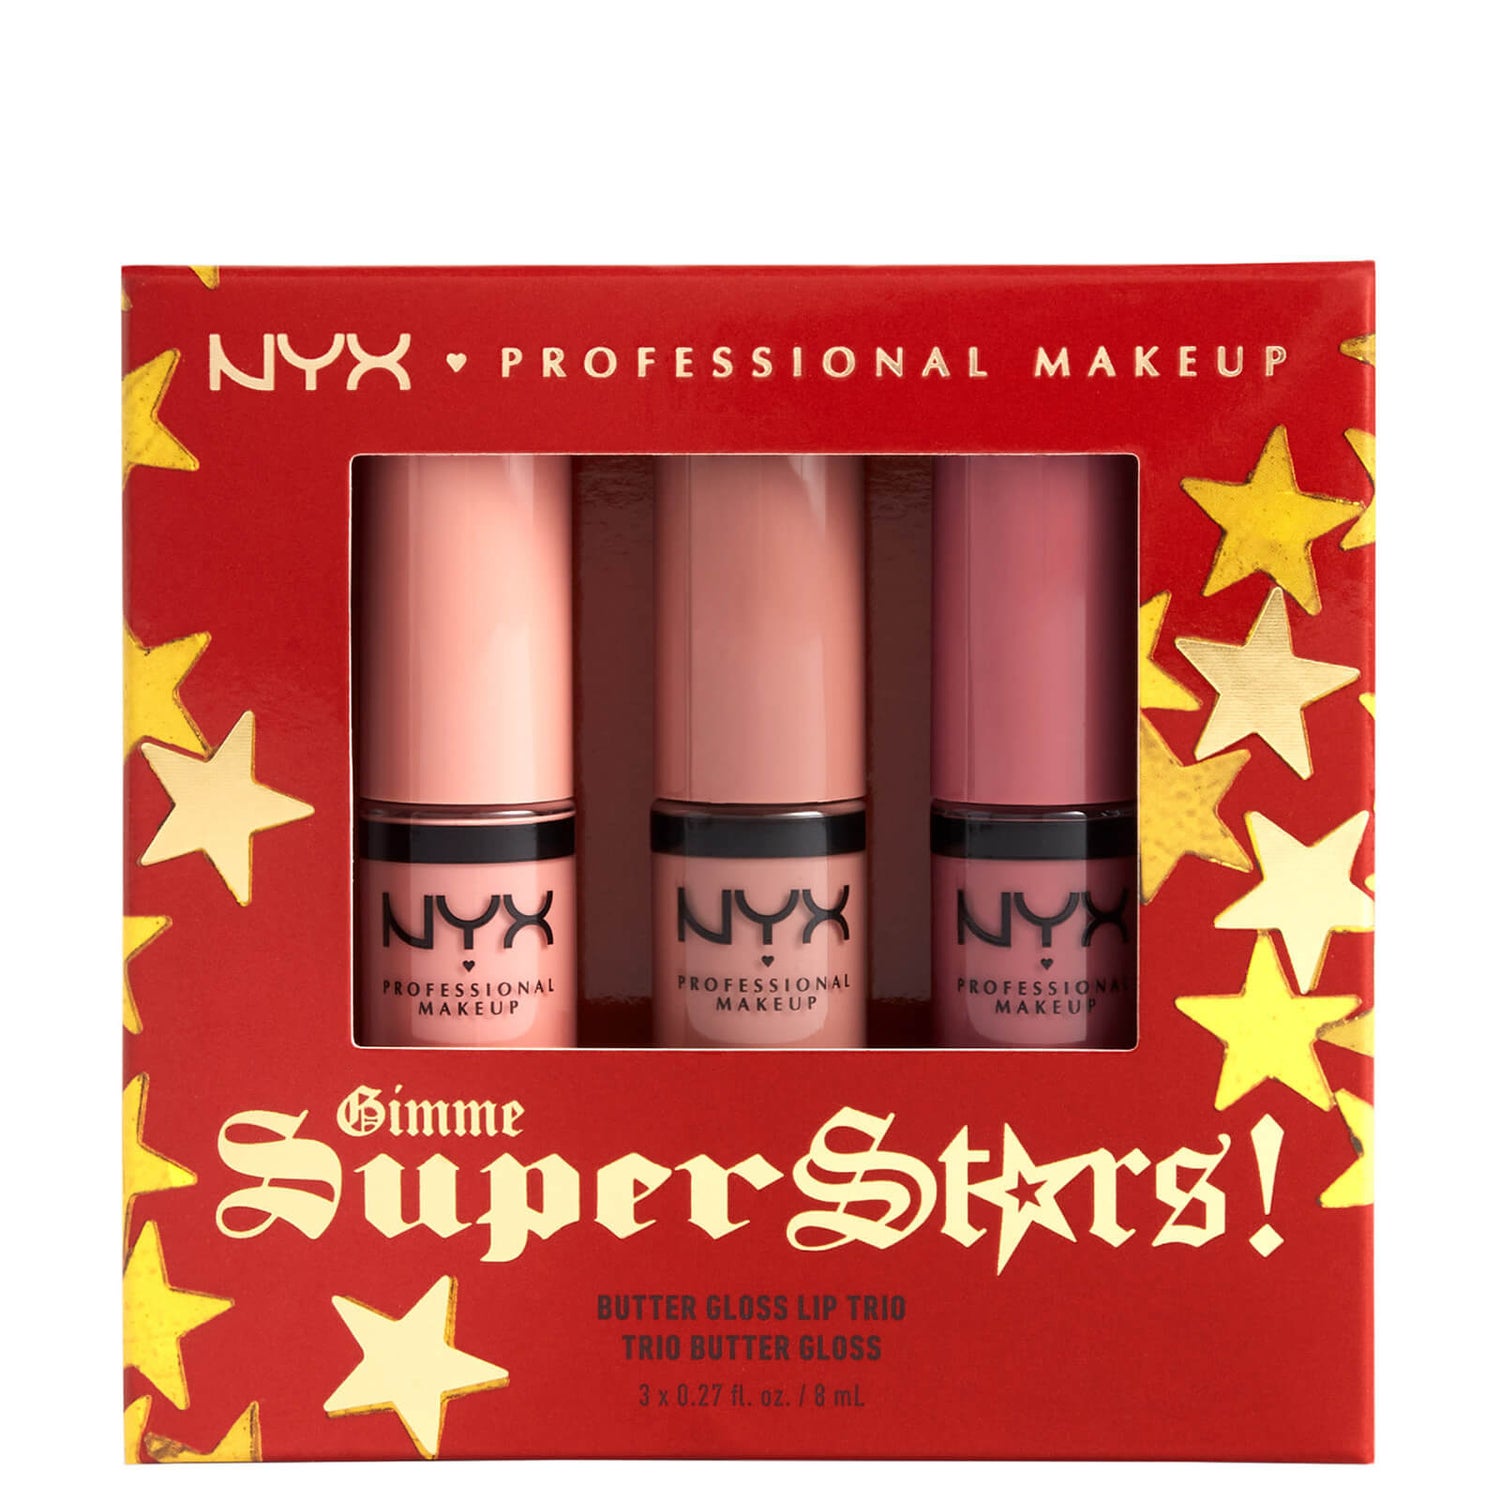 NYX Professional Makeup Gimme Super Stars! Set Regalo Butter Gloss Lip Trio Light Nude